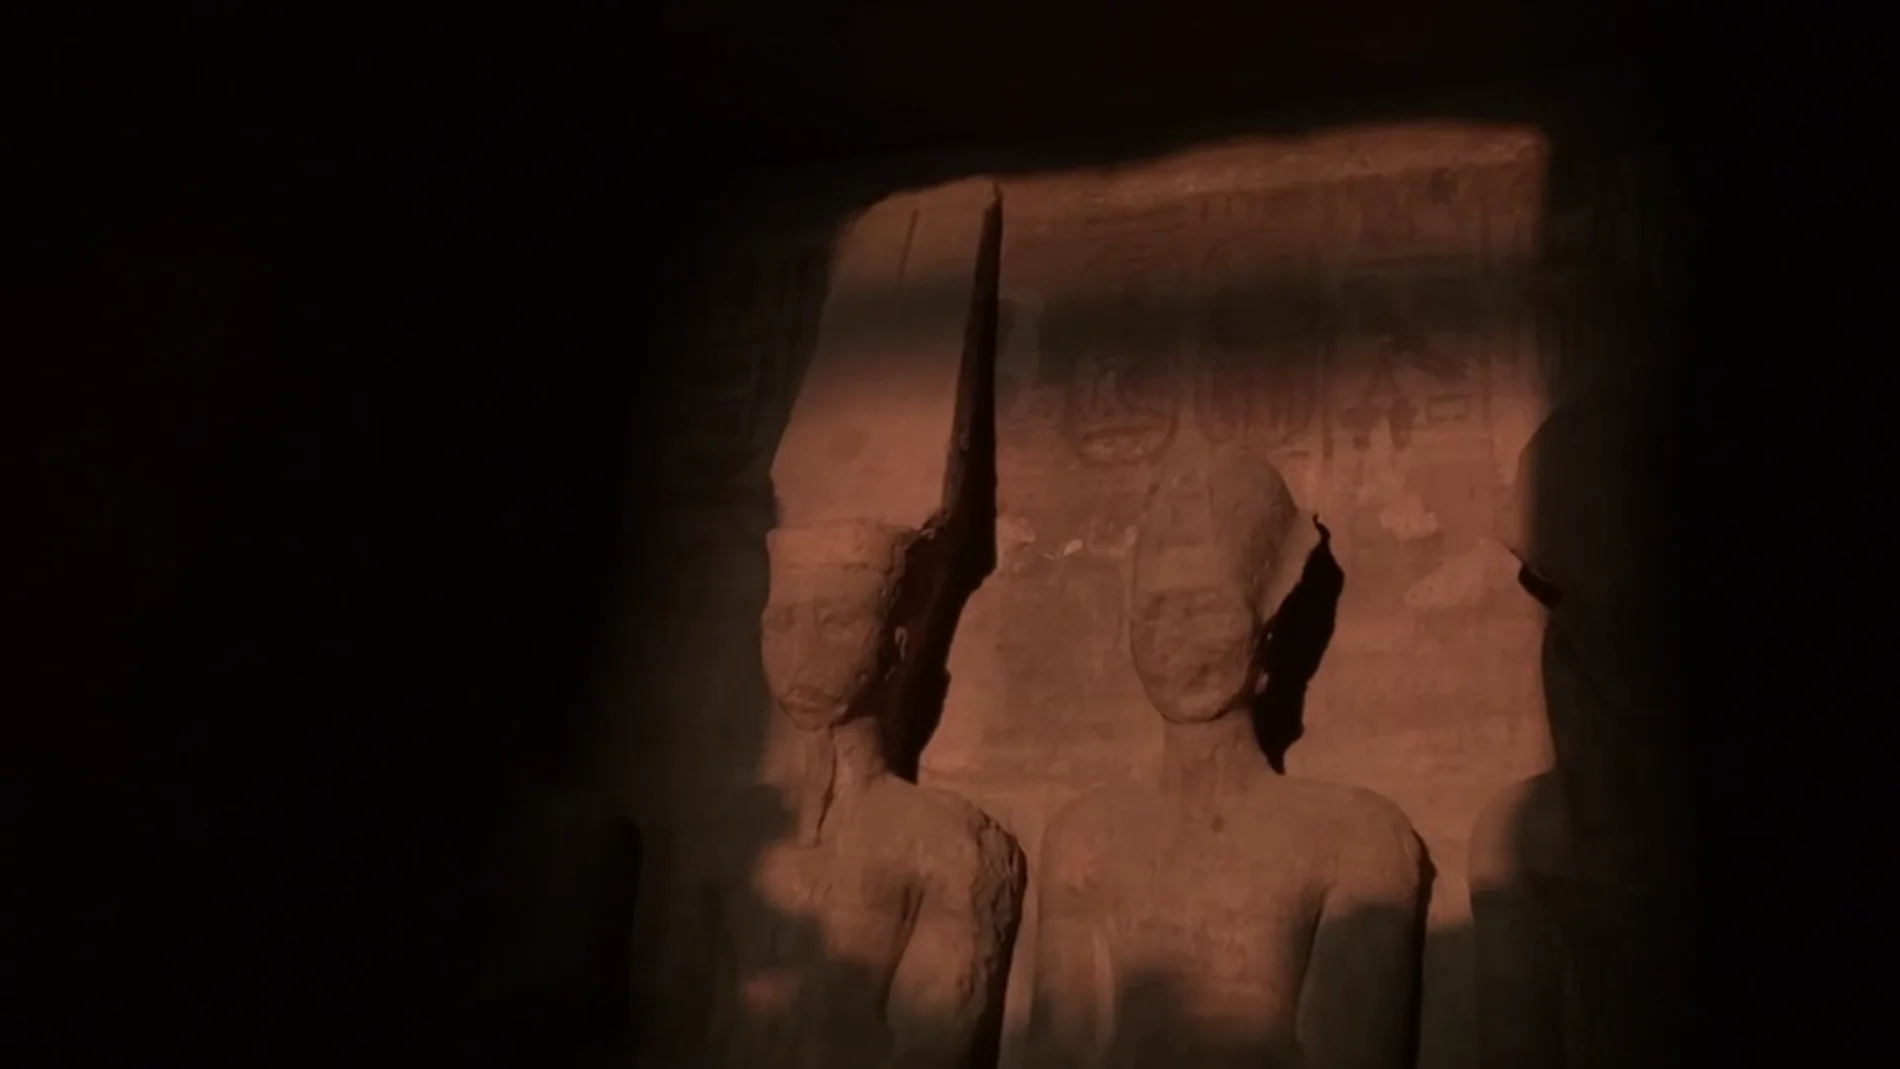 La luz del amanecer ilumina el rostro de Ramsés II en el templo de Abu Simbel